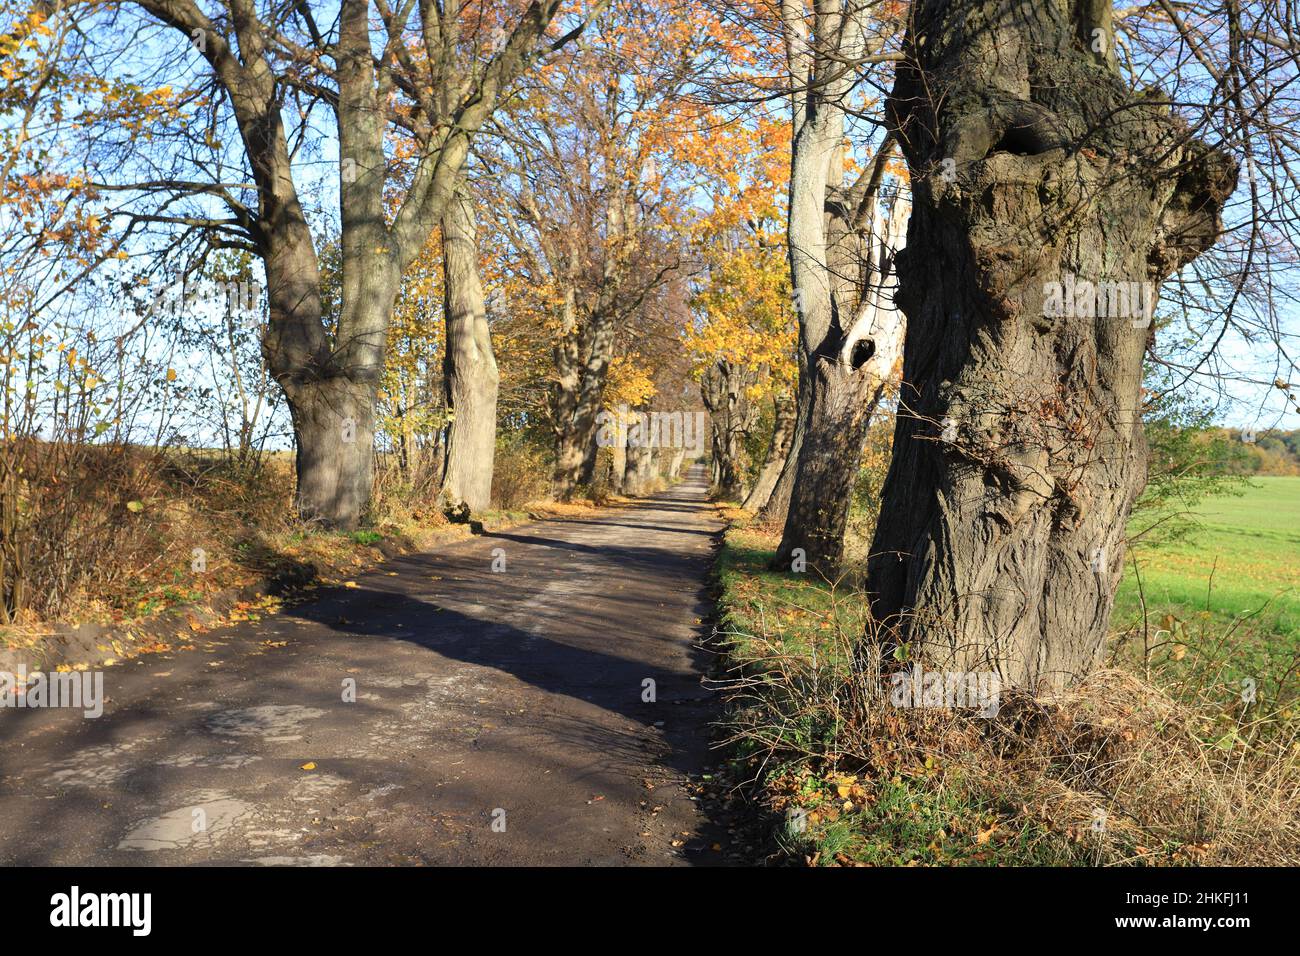 Old rural road with avenue of old linden trees in the autumn season, Oslonino-Rzucewo, Pomerania, Poland Stock Photo